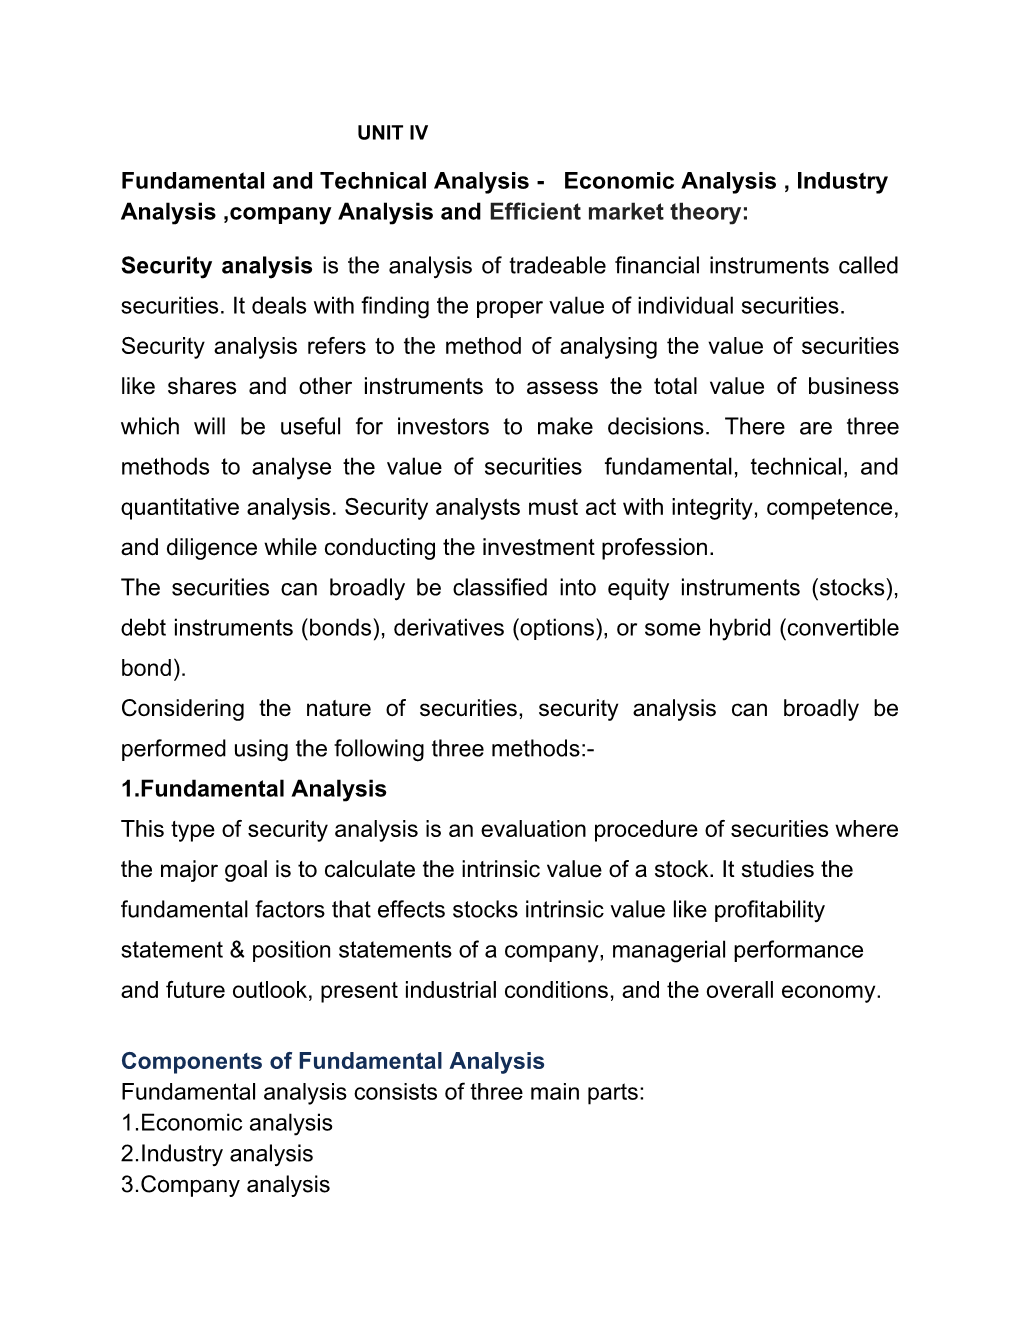 Fundamental and Technical Analysis - Economic Analysis , Industry Analysis ,Company Analysis and Efficient Market Theory